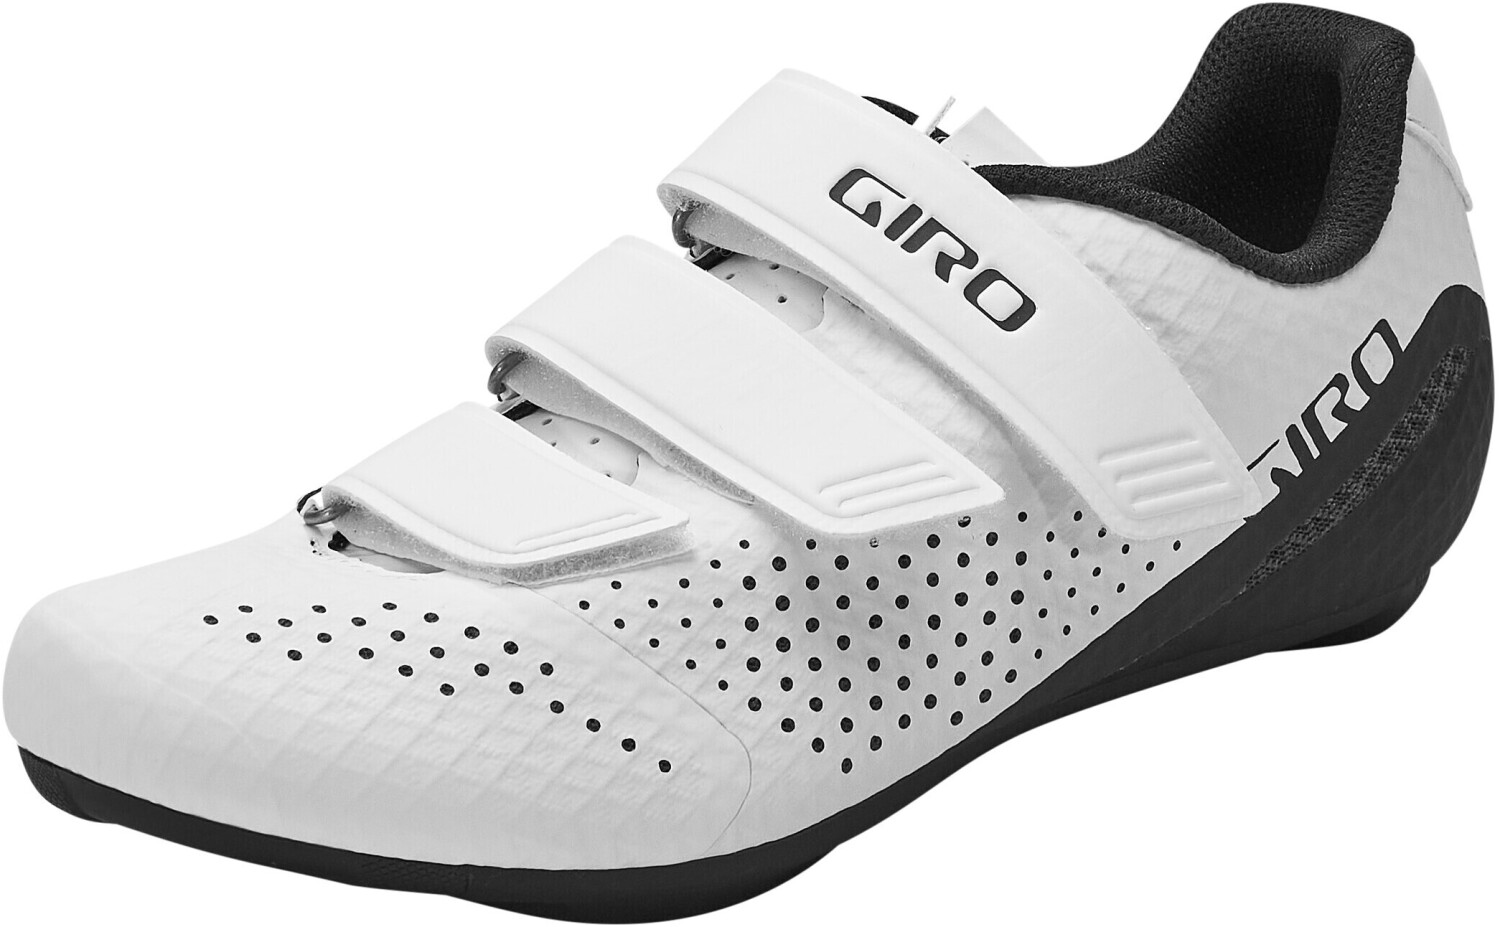 Giro Zapatillas Ciclismo Carretera Hombre - Regime - blanco